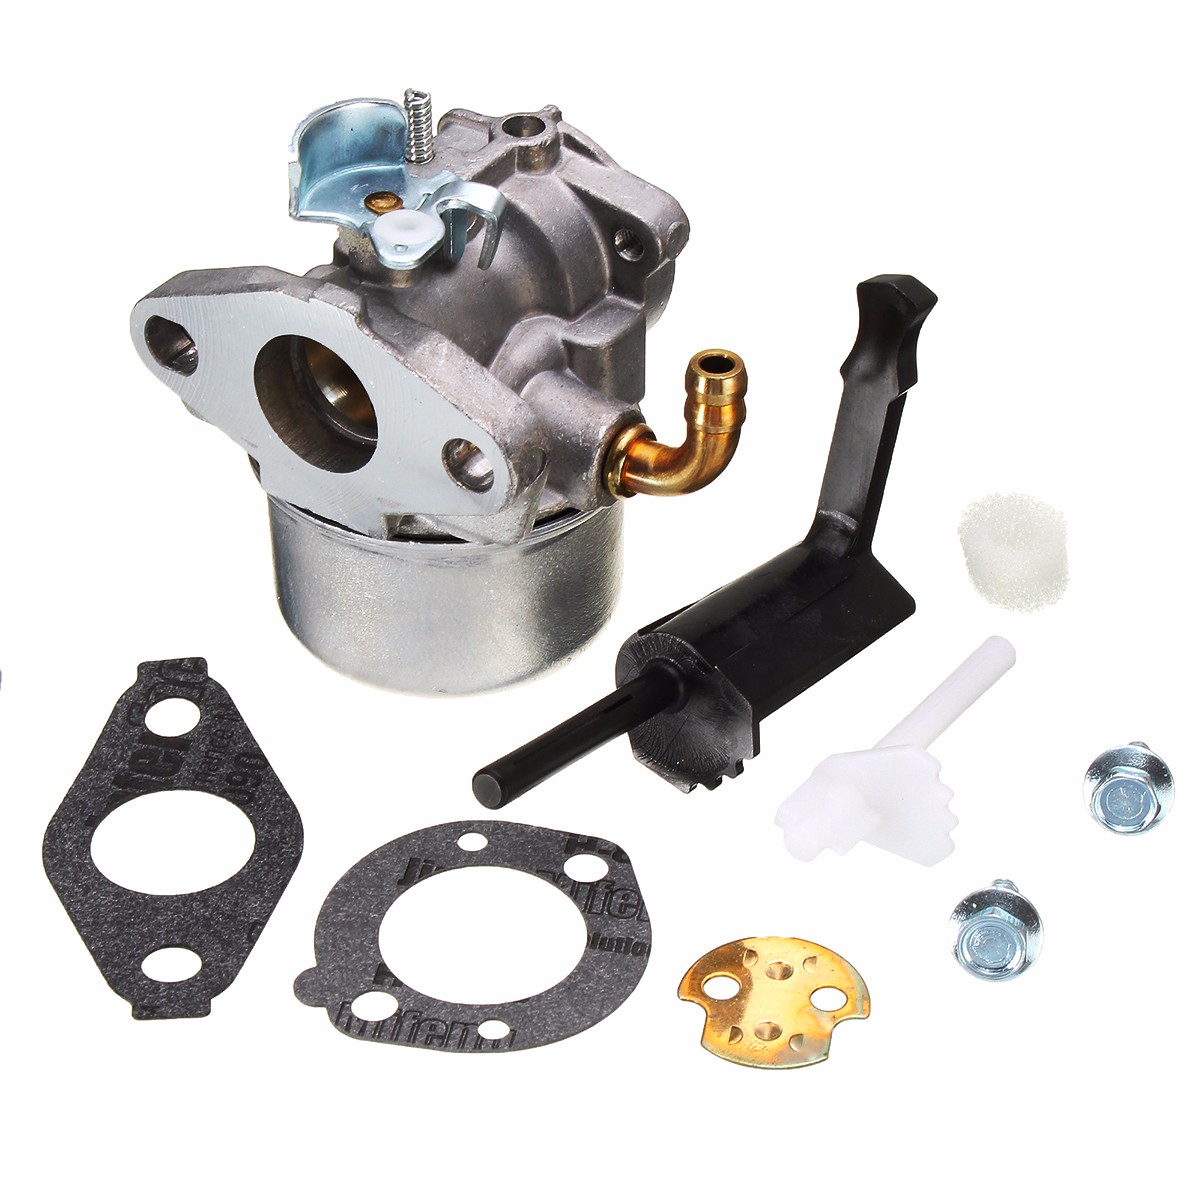 

Carburetor Accessories Kit For Briggs & Stratton 591299 798650 698474 791991